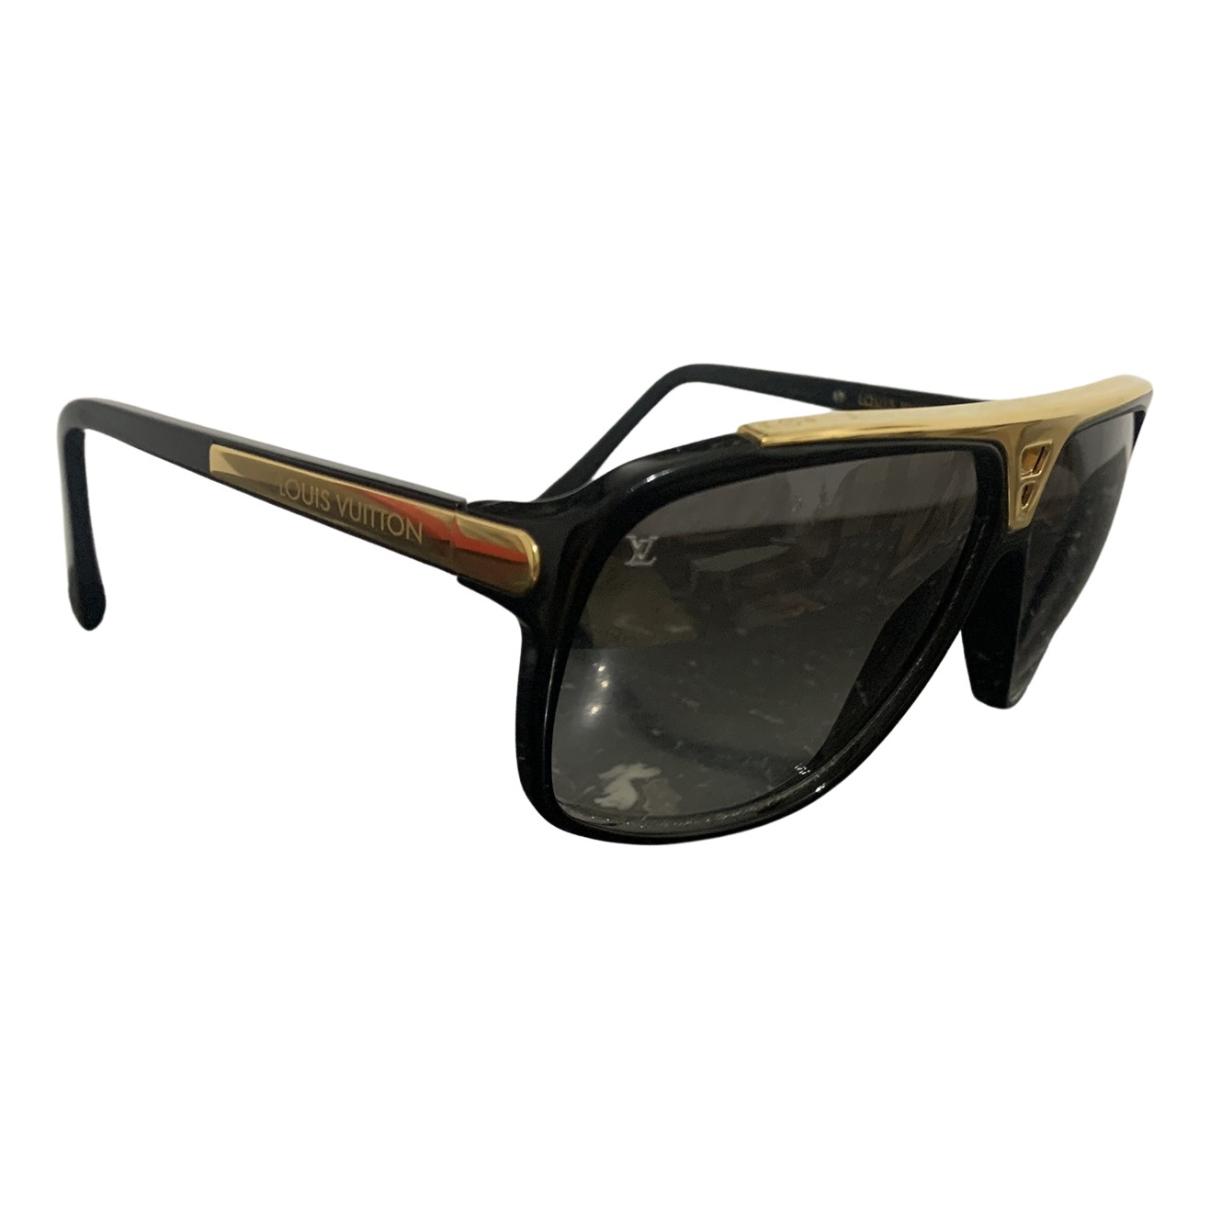 1.1 millionnaires sunglasses Louis Vuitton Black in Plastic - 33738021